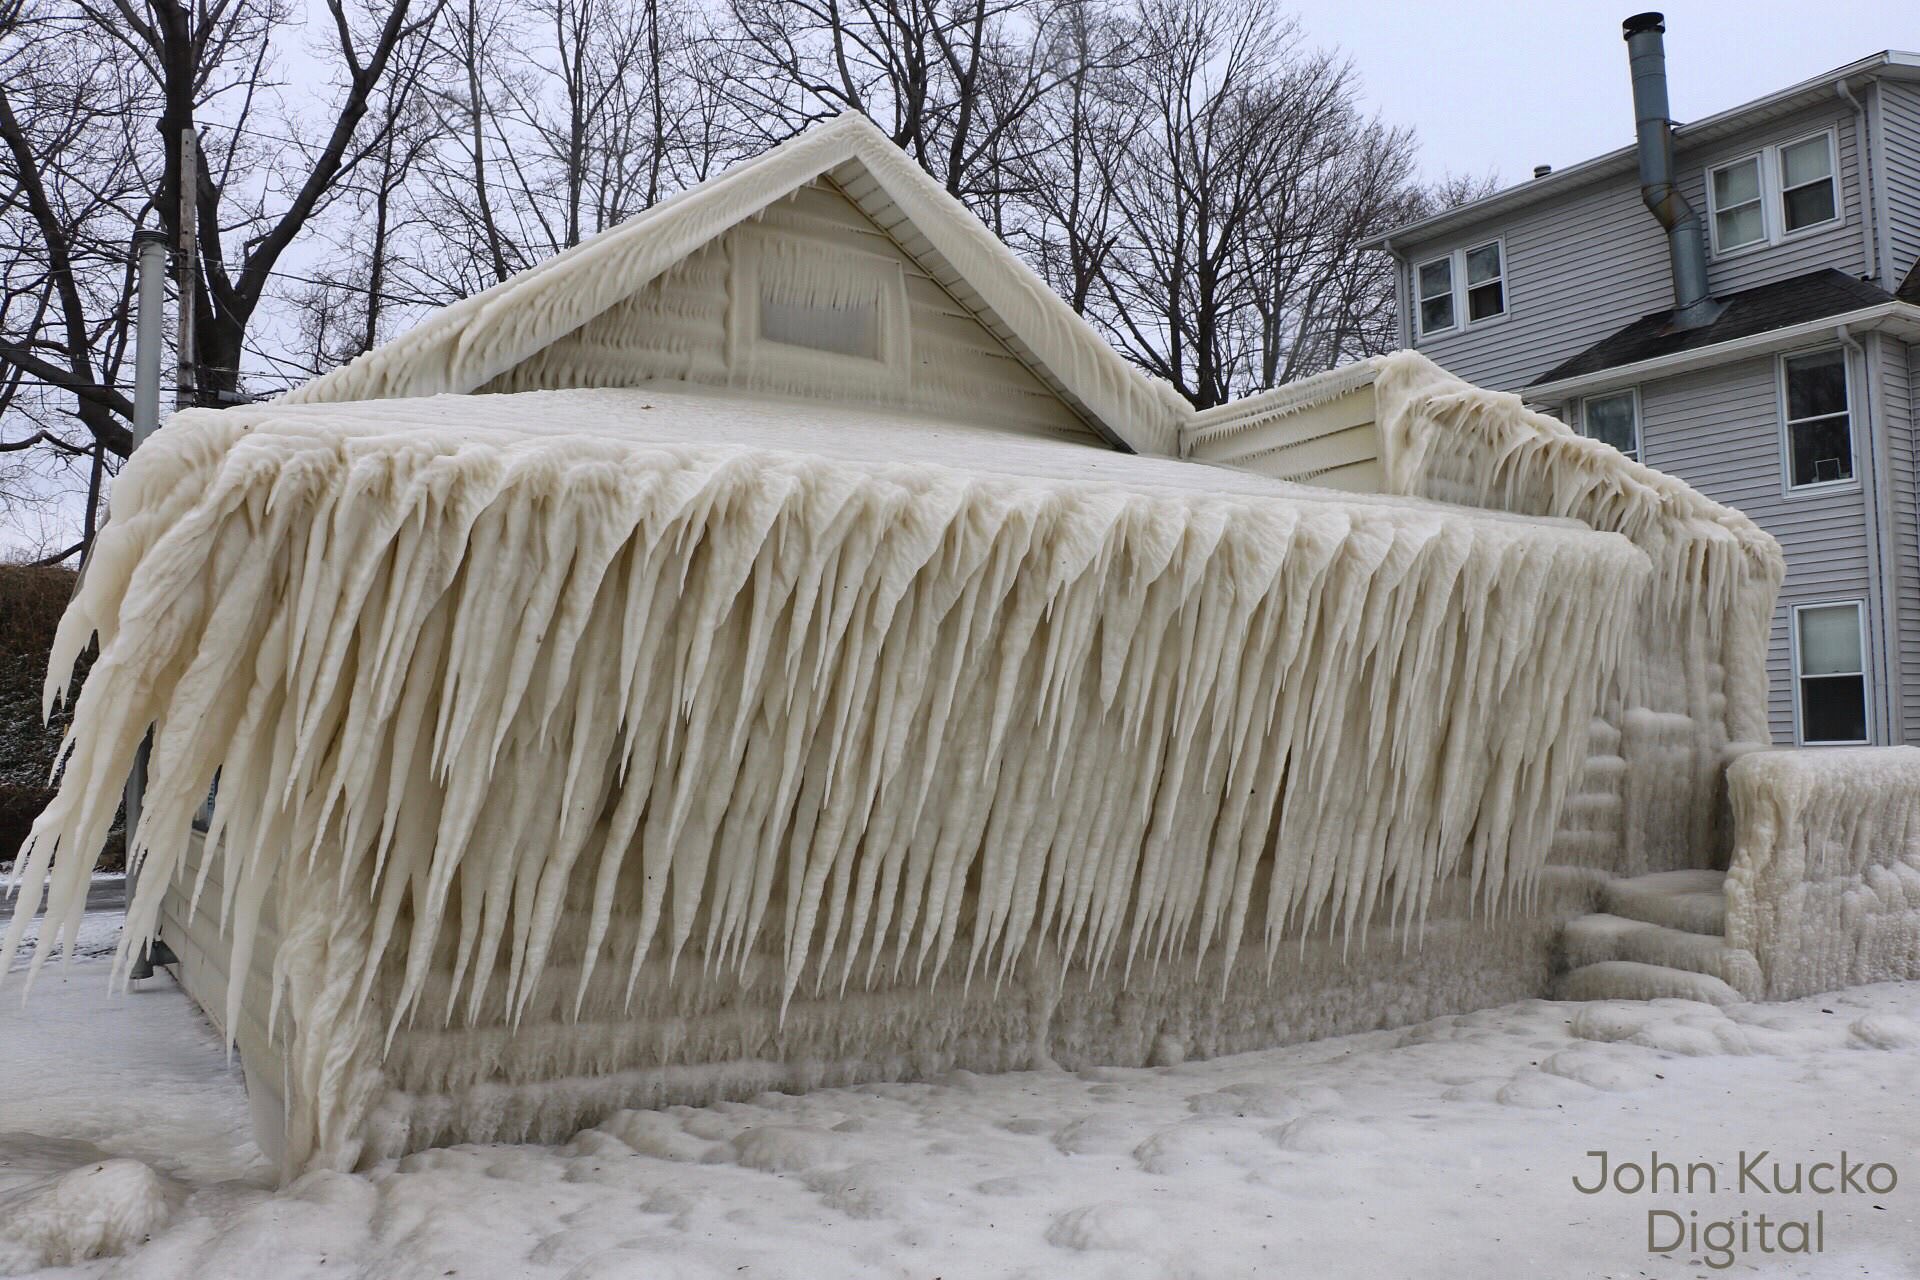 A frozen house : interestingasfuck